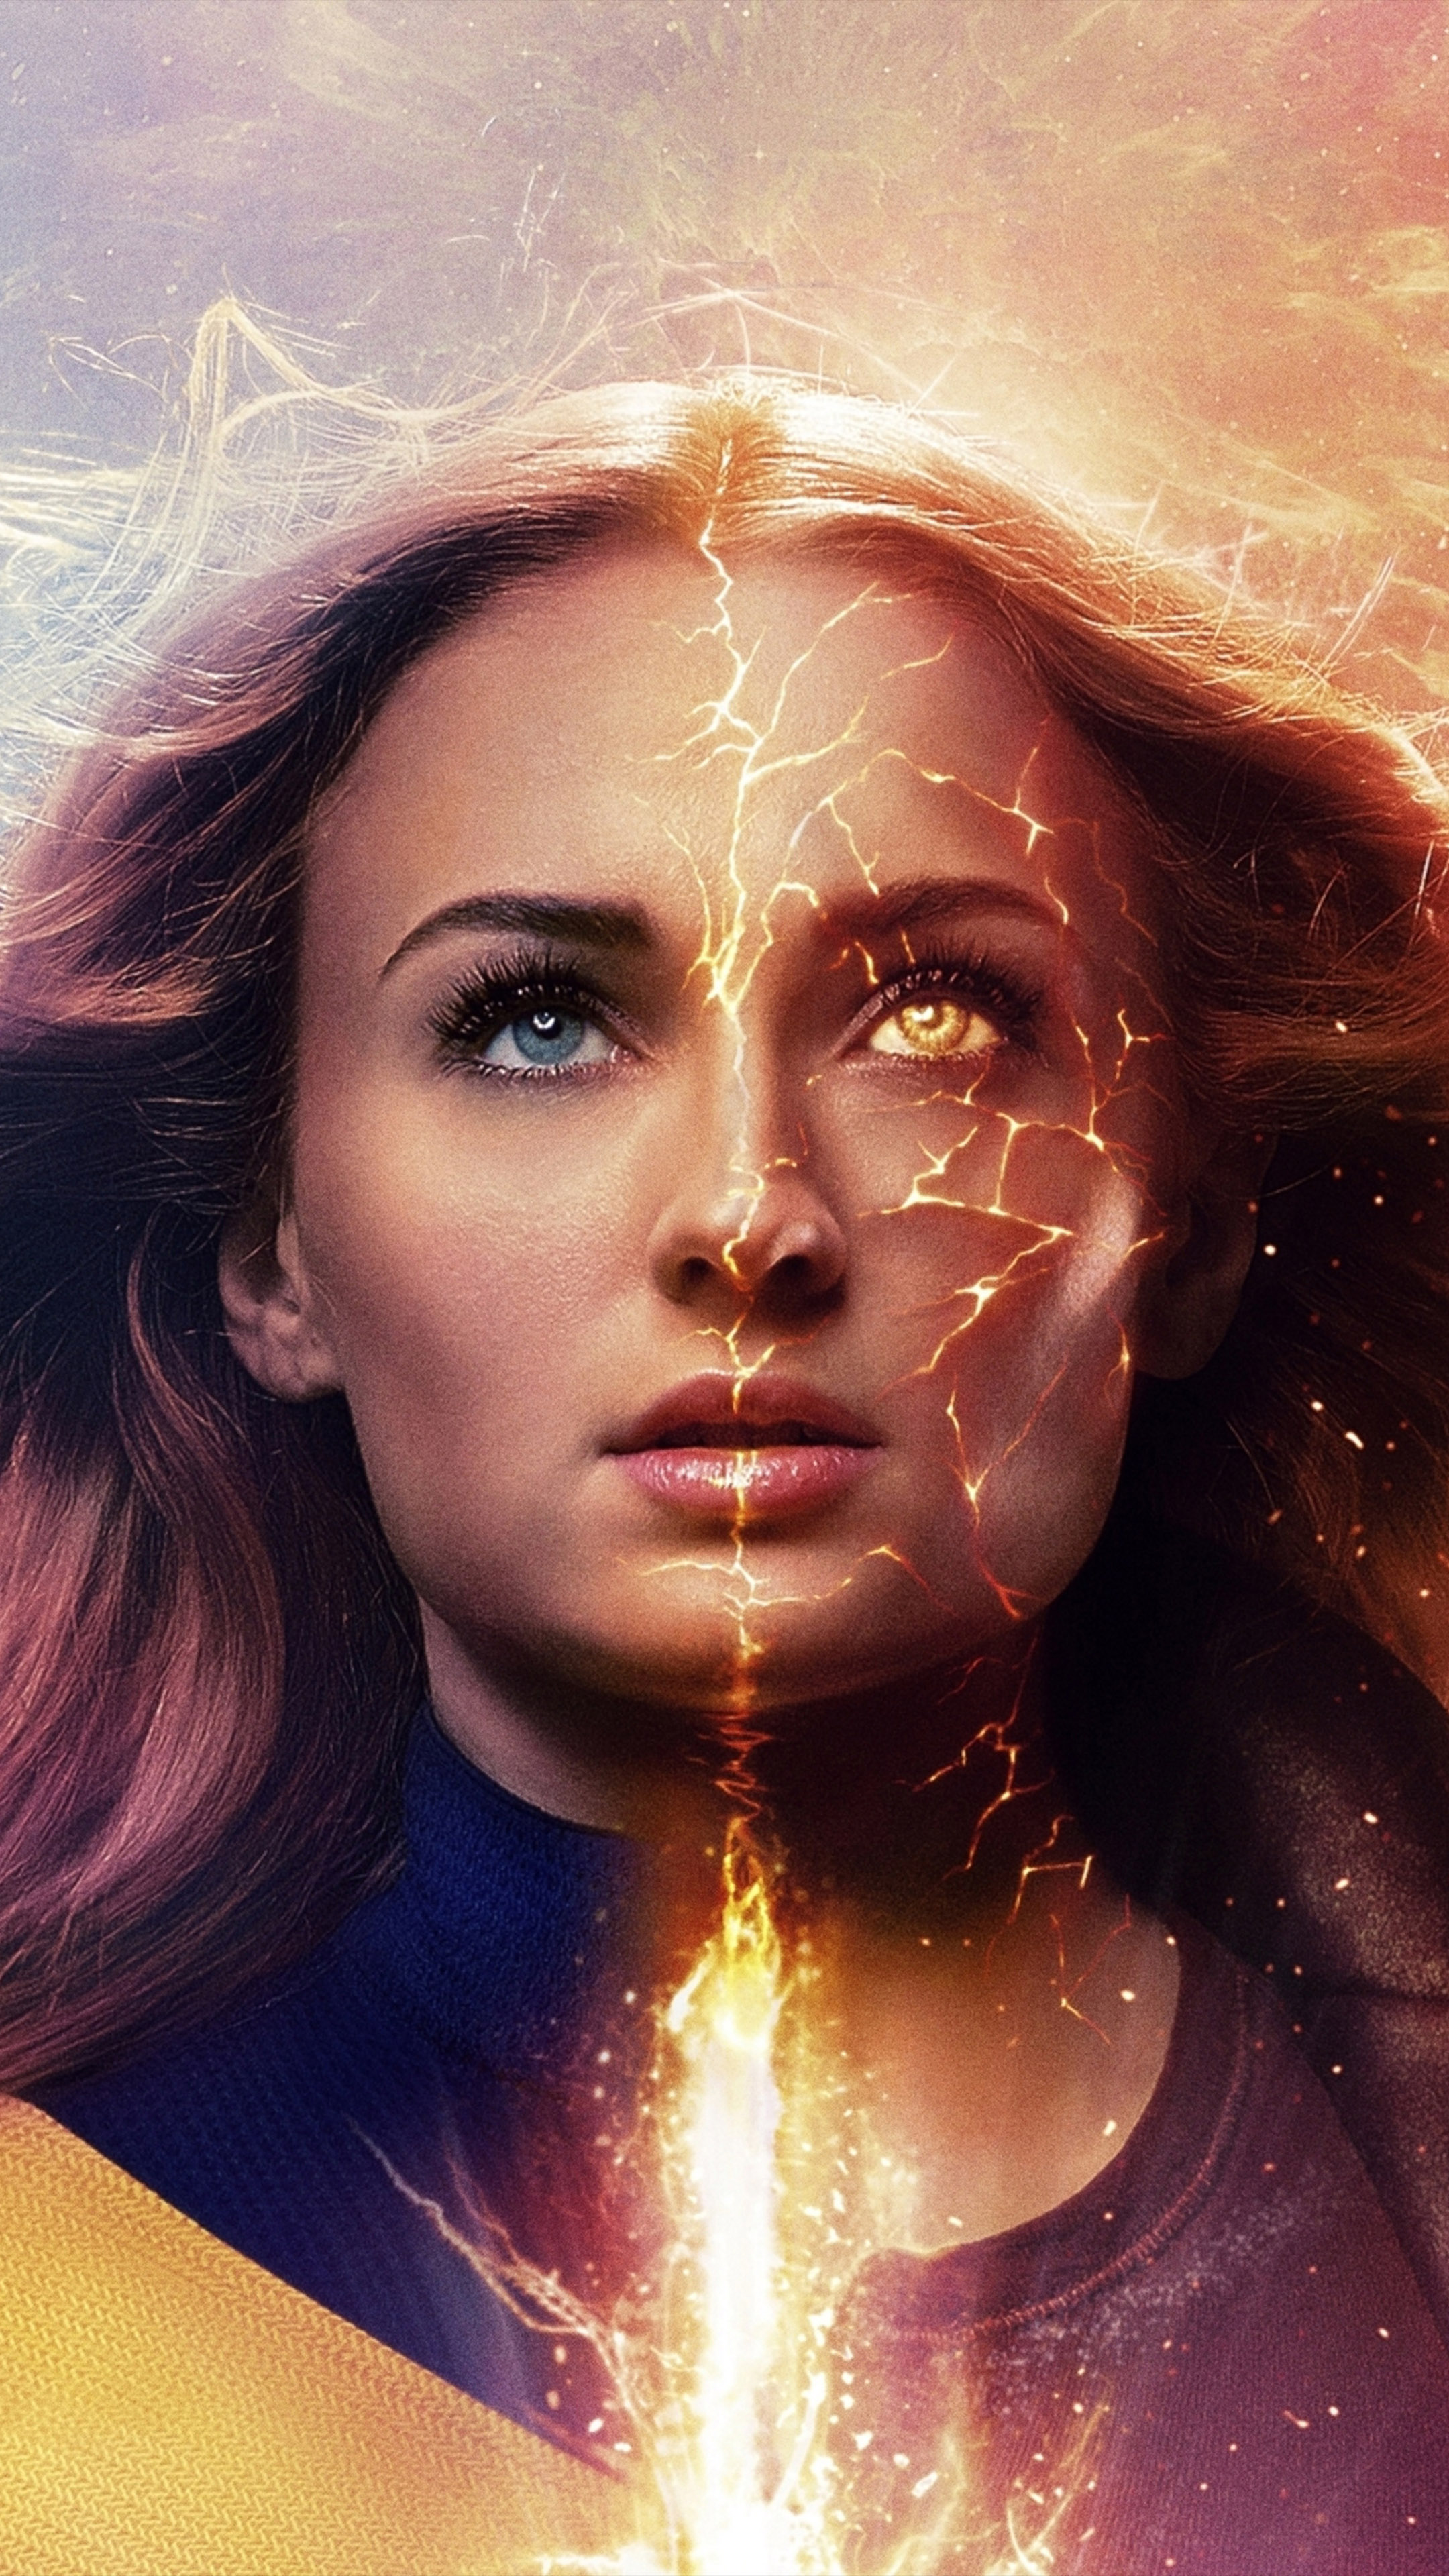 Sophie Turner As Jean Grey In X-Men Dark Phoenix Free 4K Ultra HD